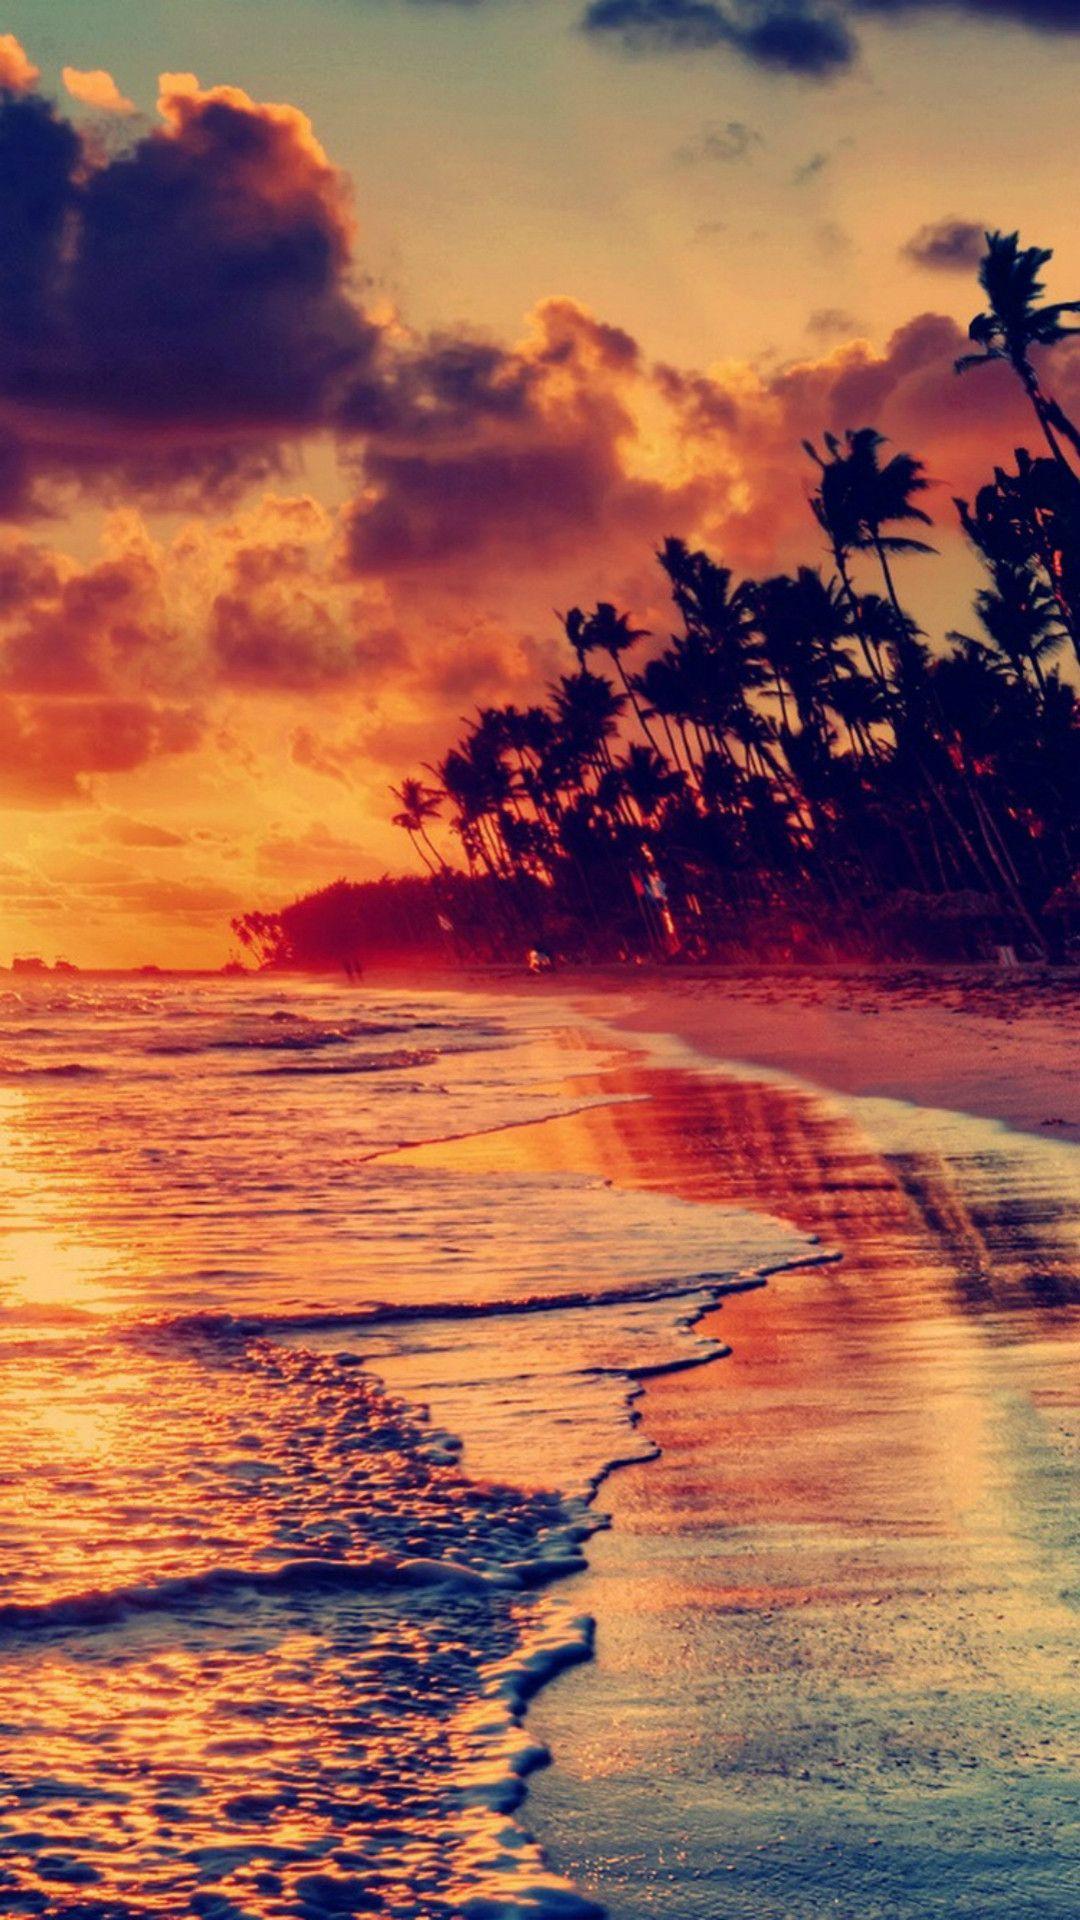 Tropical Beach Sunset Wallpapers - Top Free Tropical Beach Sunset